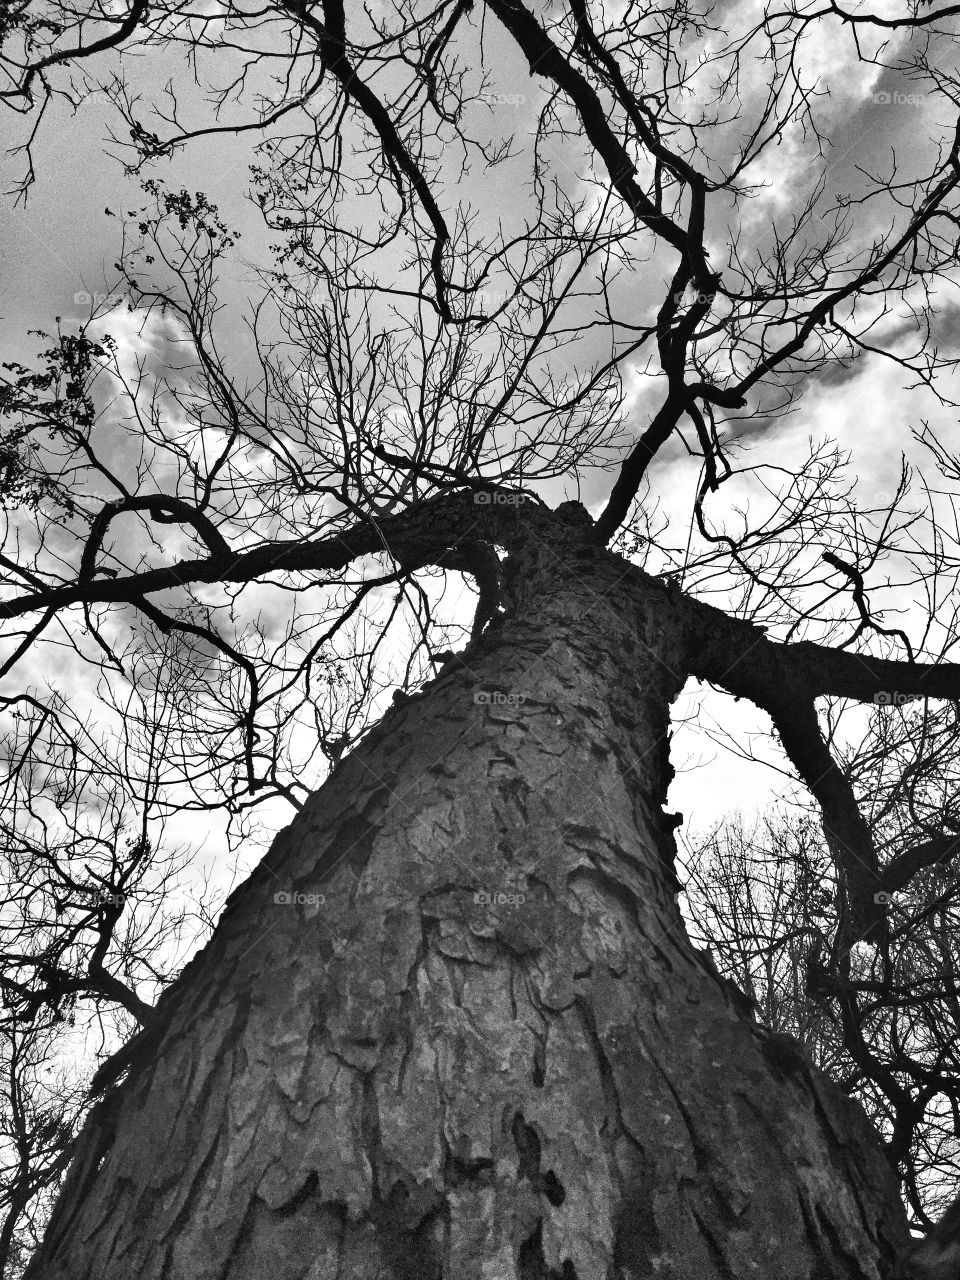 Tree in Winter - ATX, Ladybird Lake, Austin TX